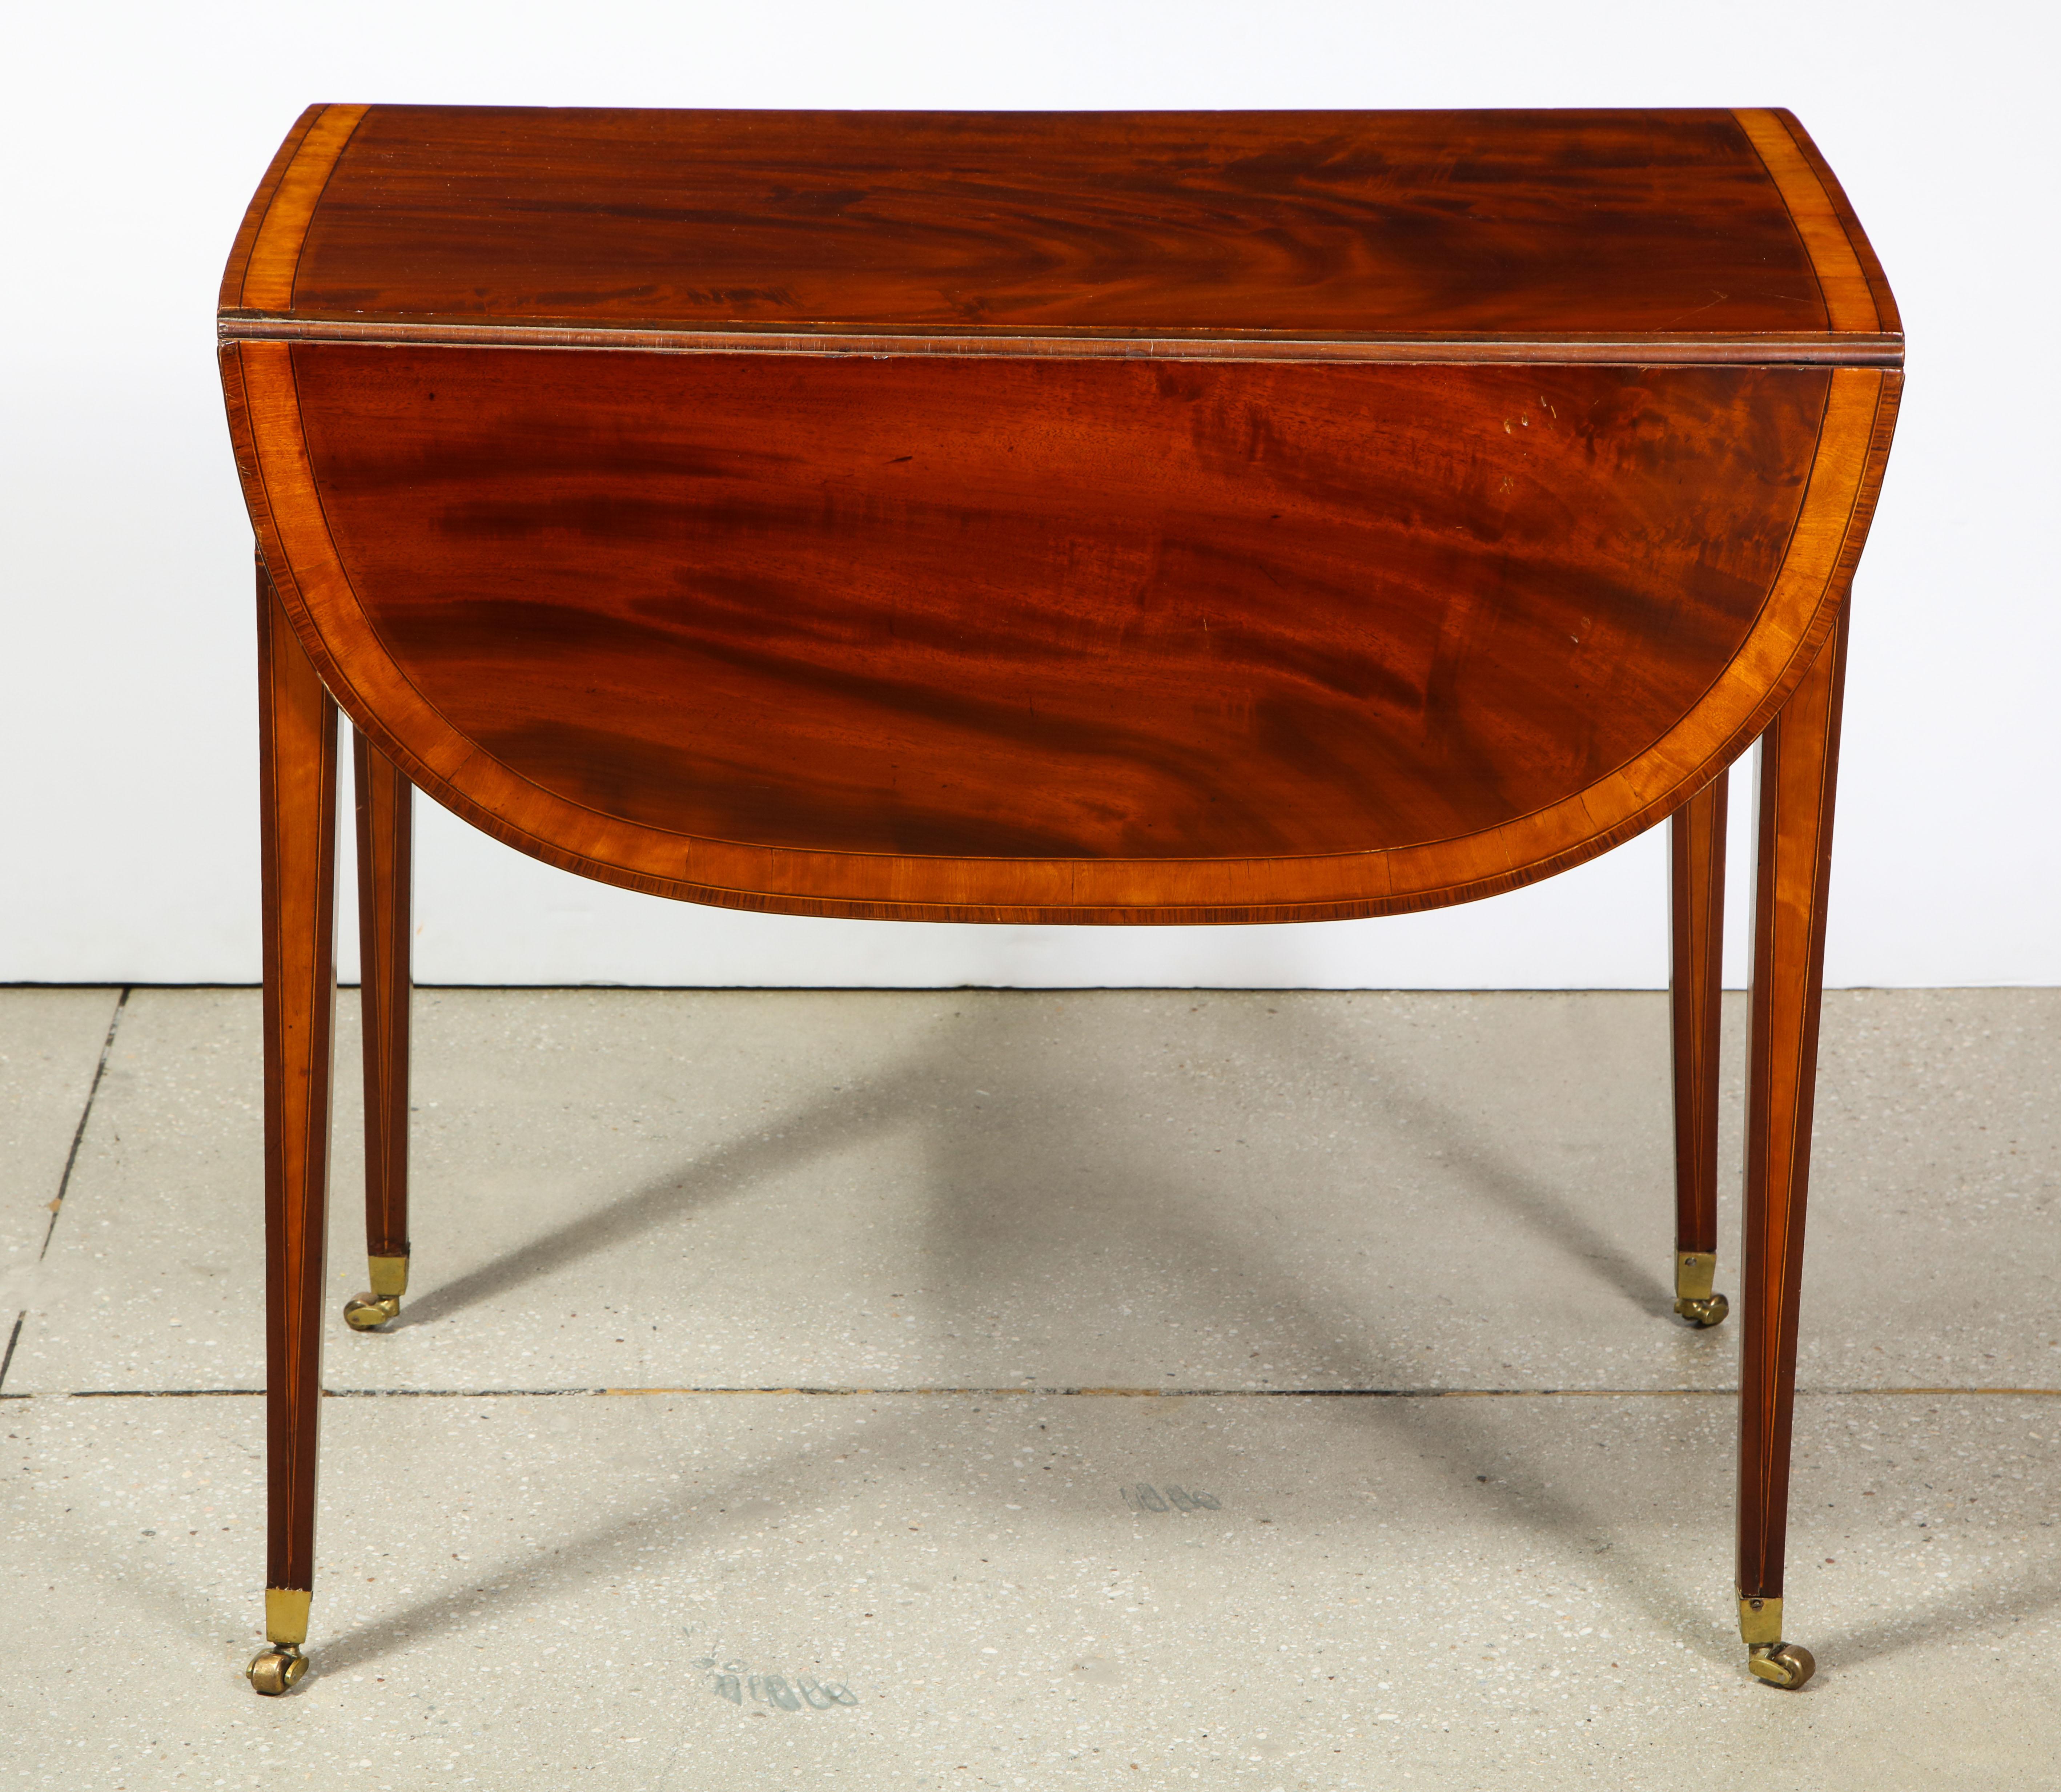 Wood Sheraton inlaid mahogany Pembroke Table with satinwood banding